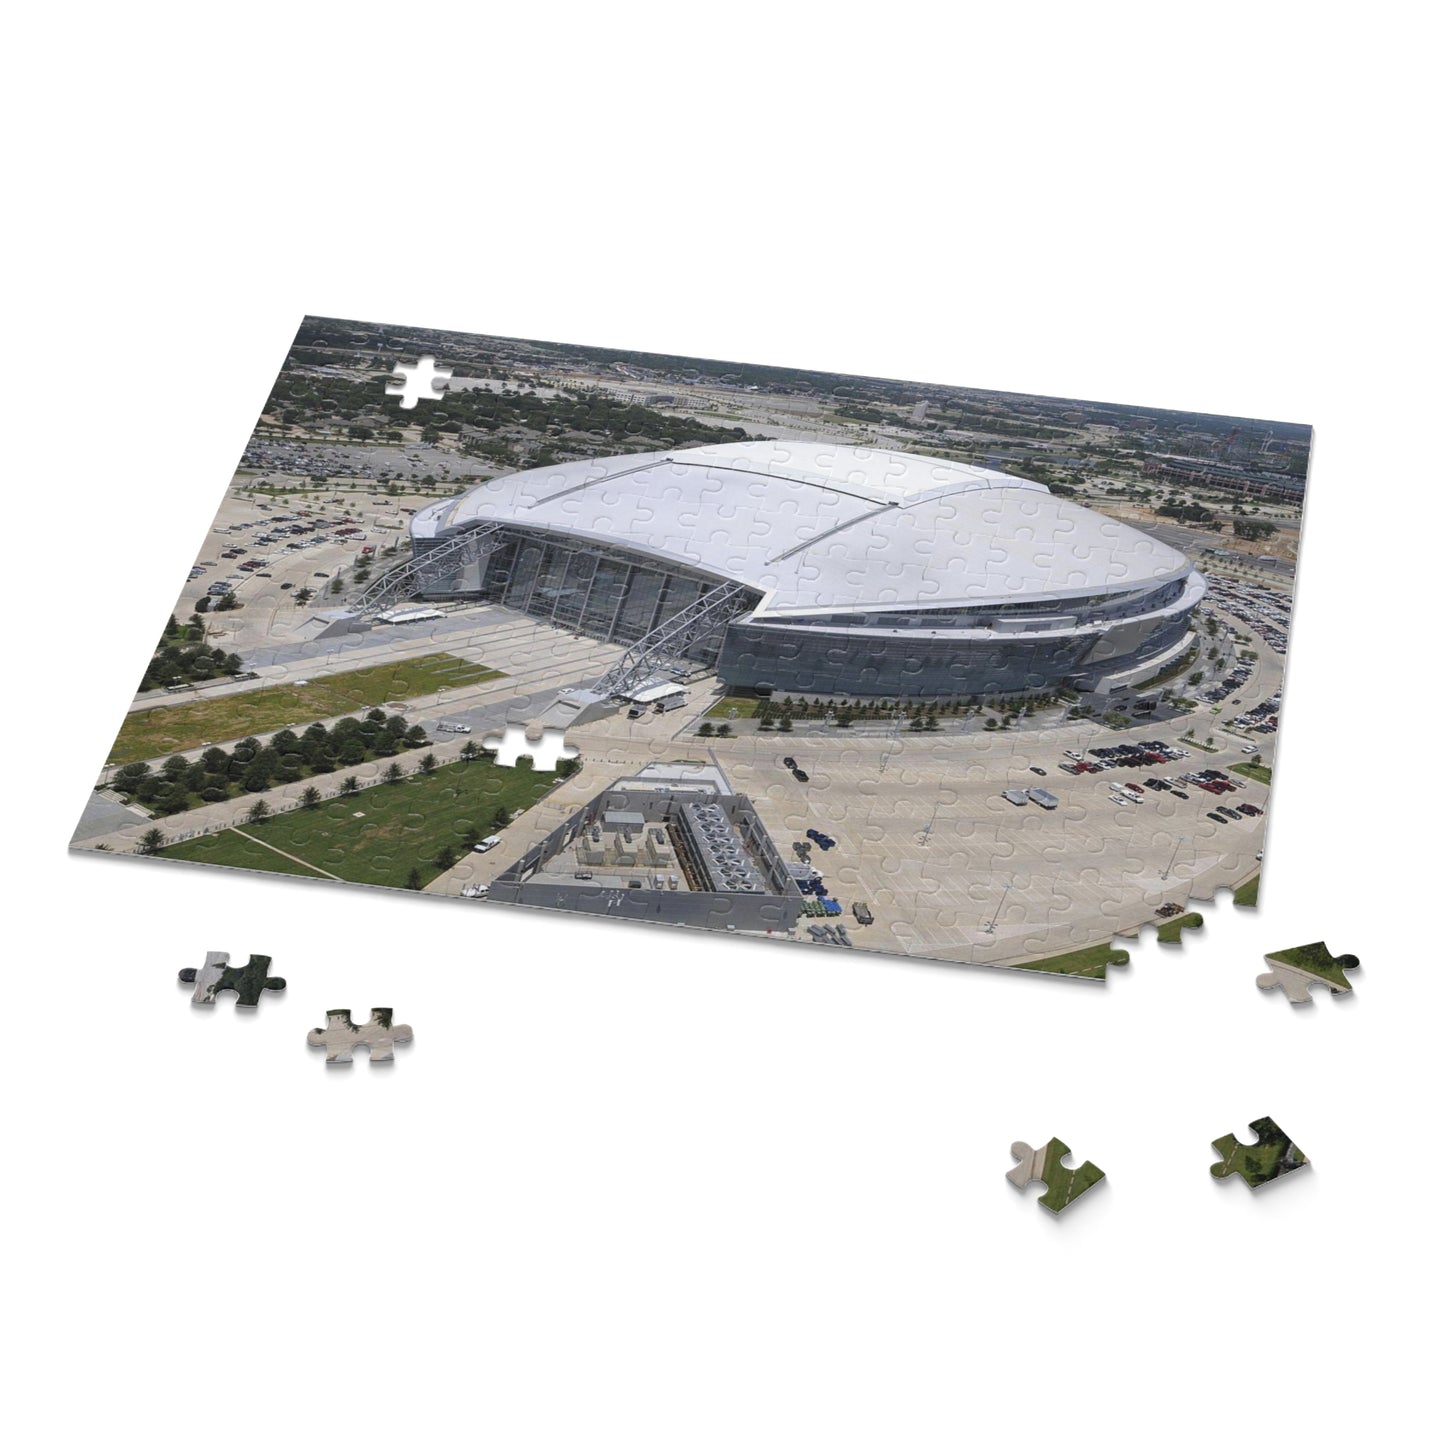 AT&T Dallas Cowboys Stadium Puzzle (252-Piece) NFL Dak Prescott MVP Quality